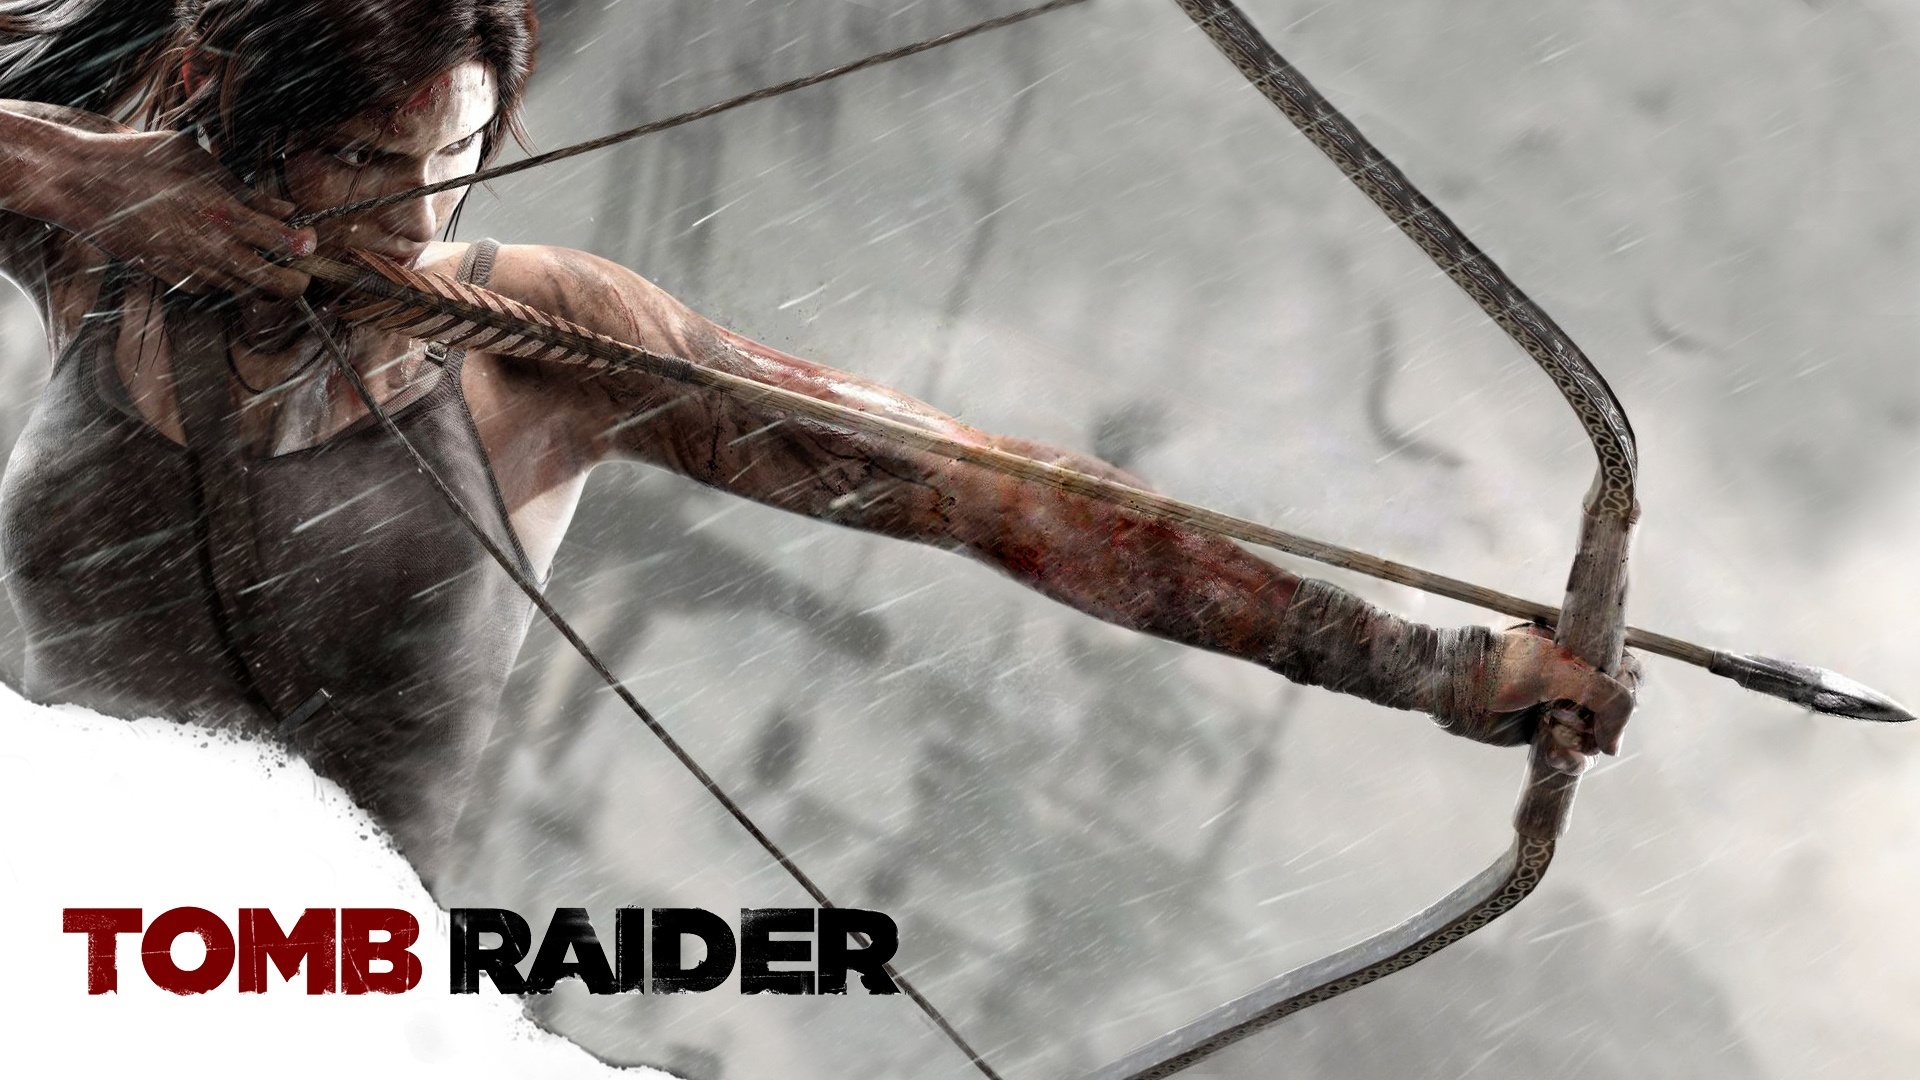 Lara Croft Tomb Raider Wallpaper